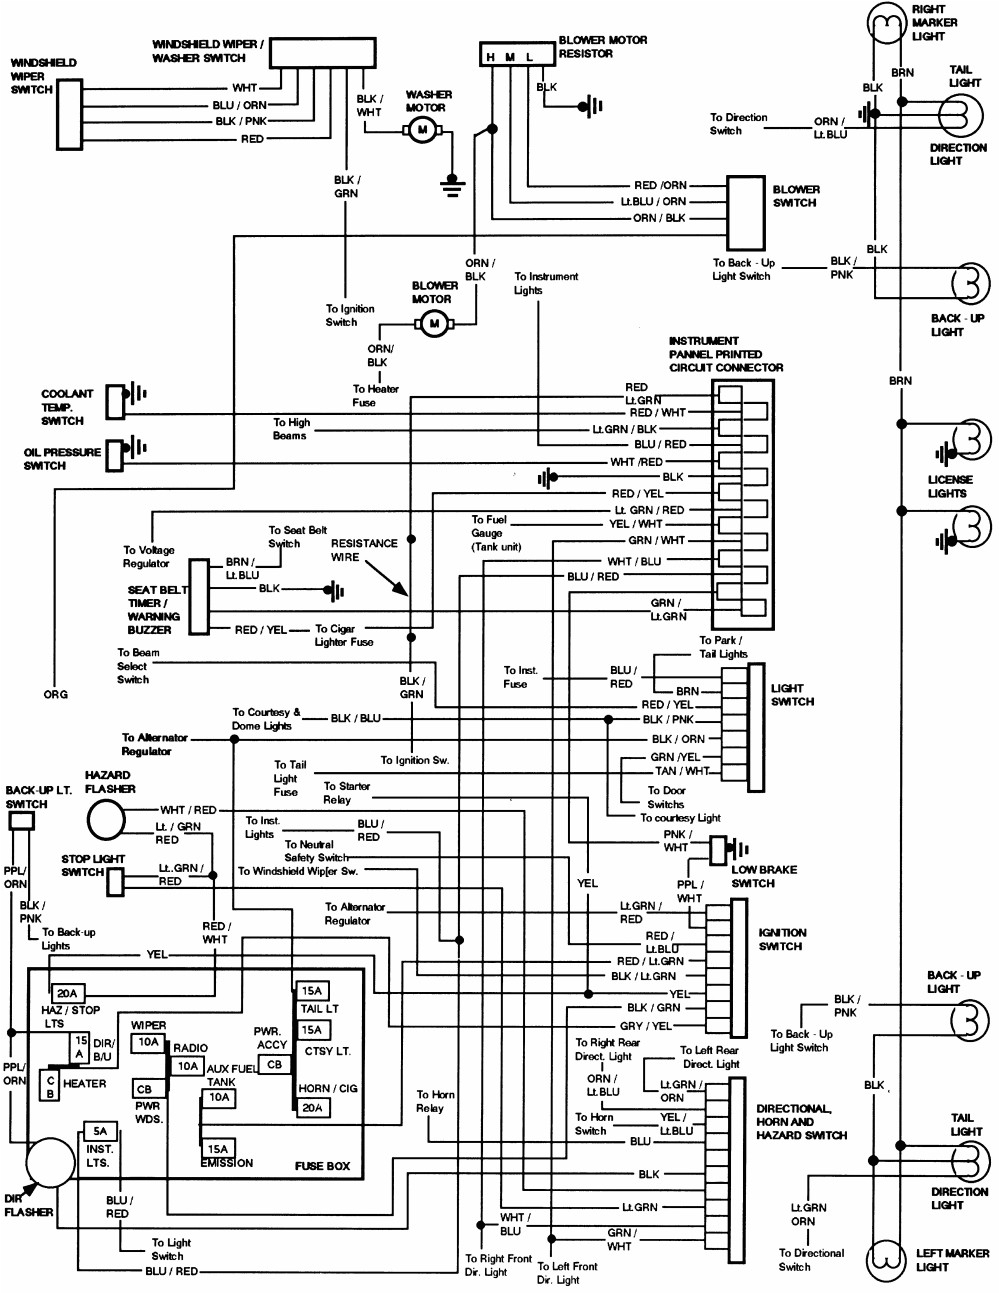 1994 ford f150 radio wiring diagram 89 f150 wiring diagram schematic wiring diagram wire center u2022 rh insurapro co ford factory radio wiring harness 1985 ford f250 radio wiring diagram 10 jpg